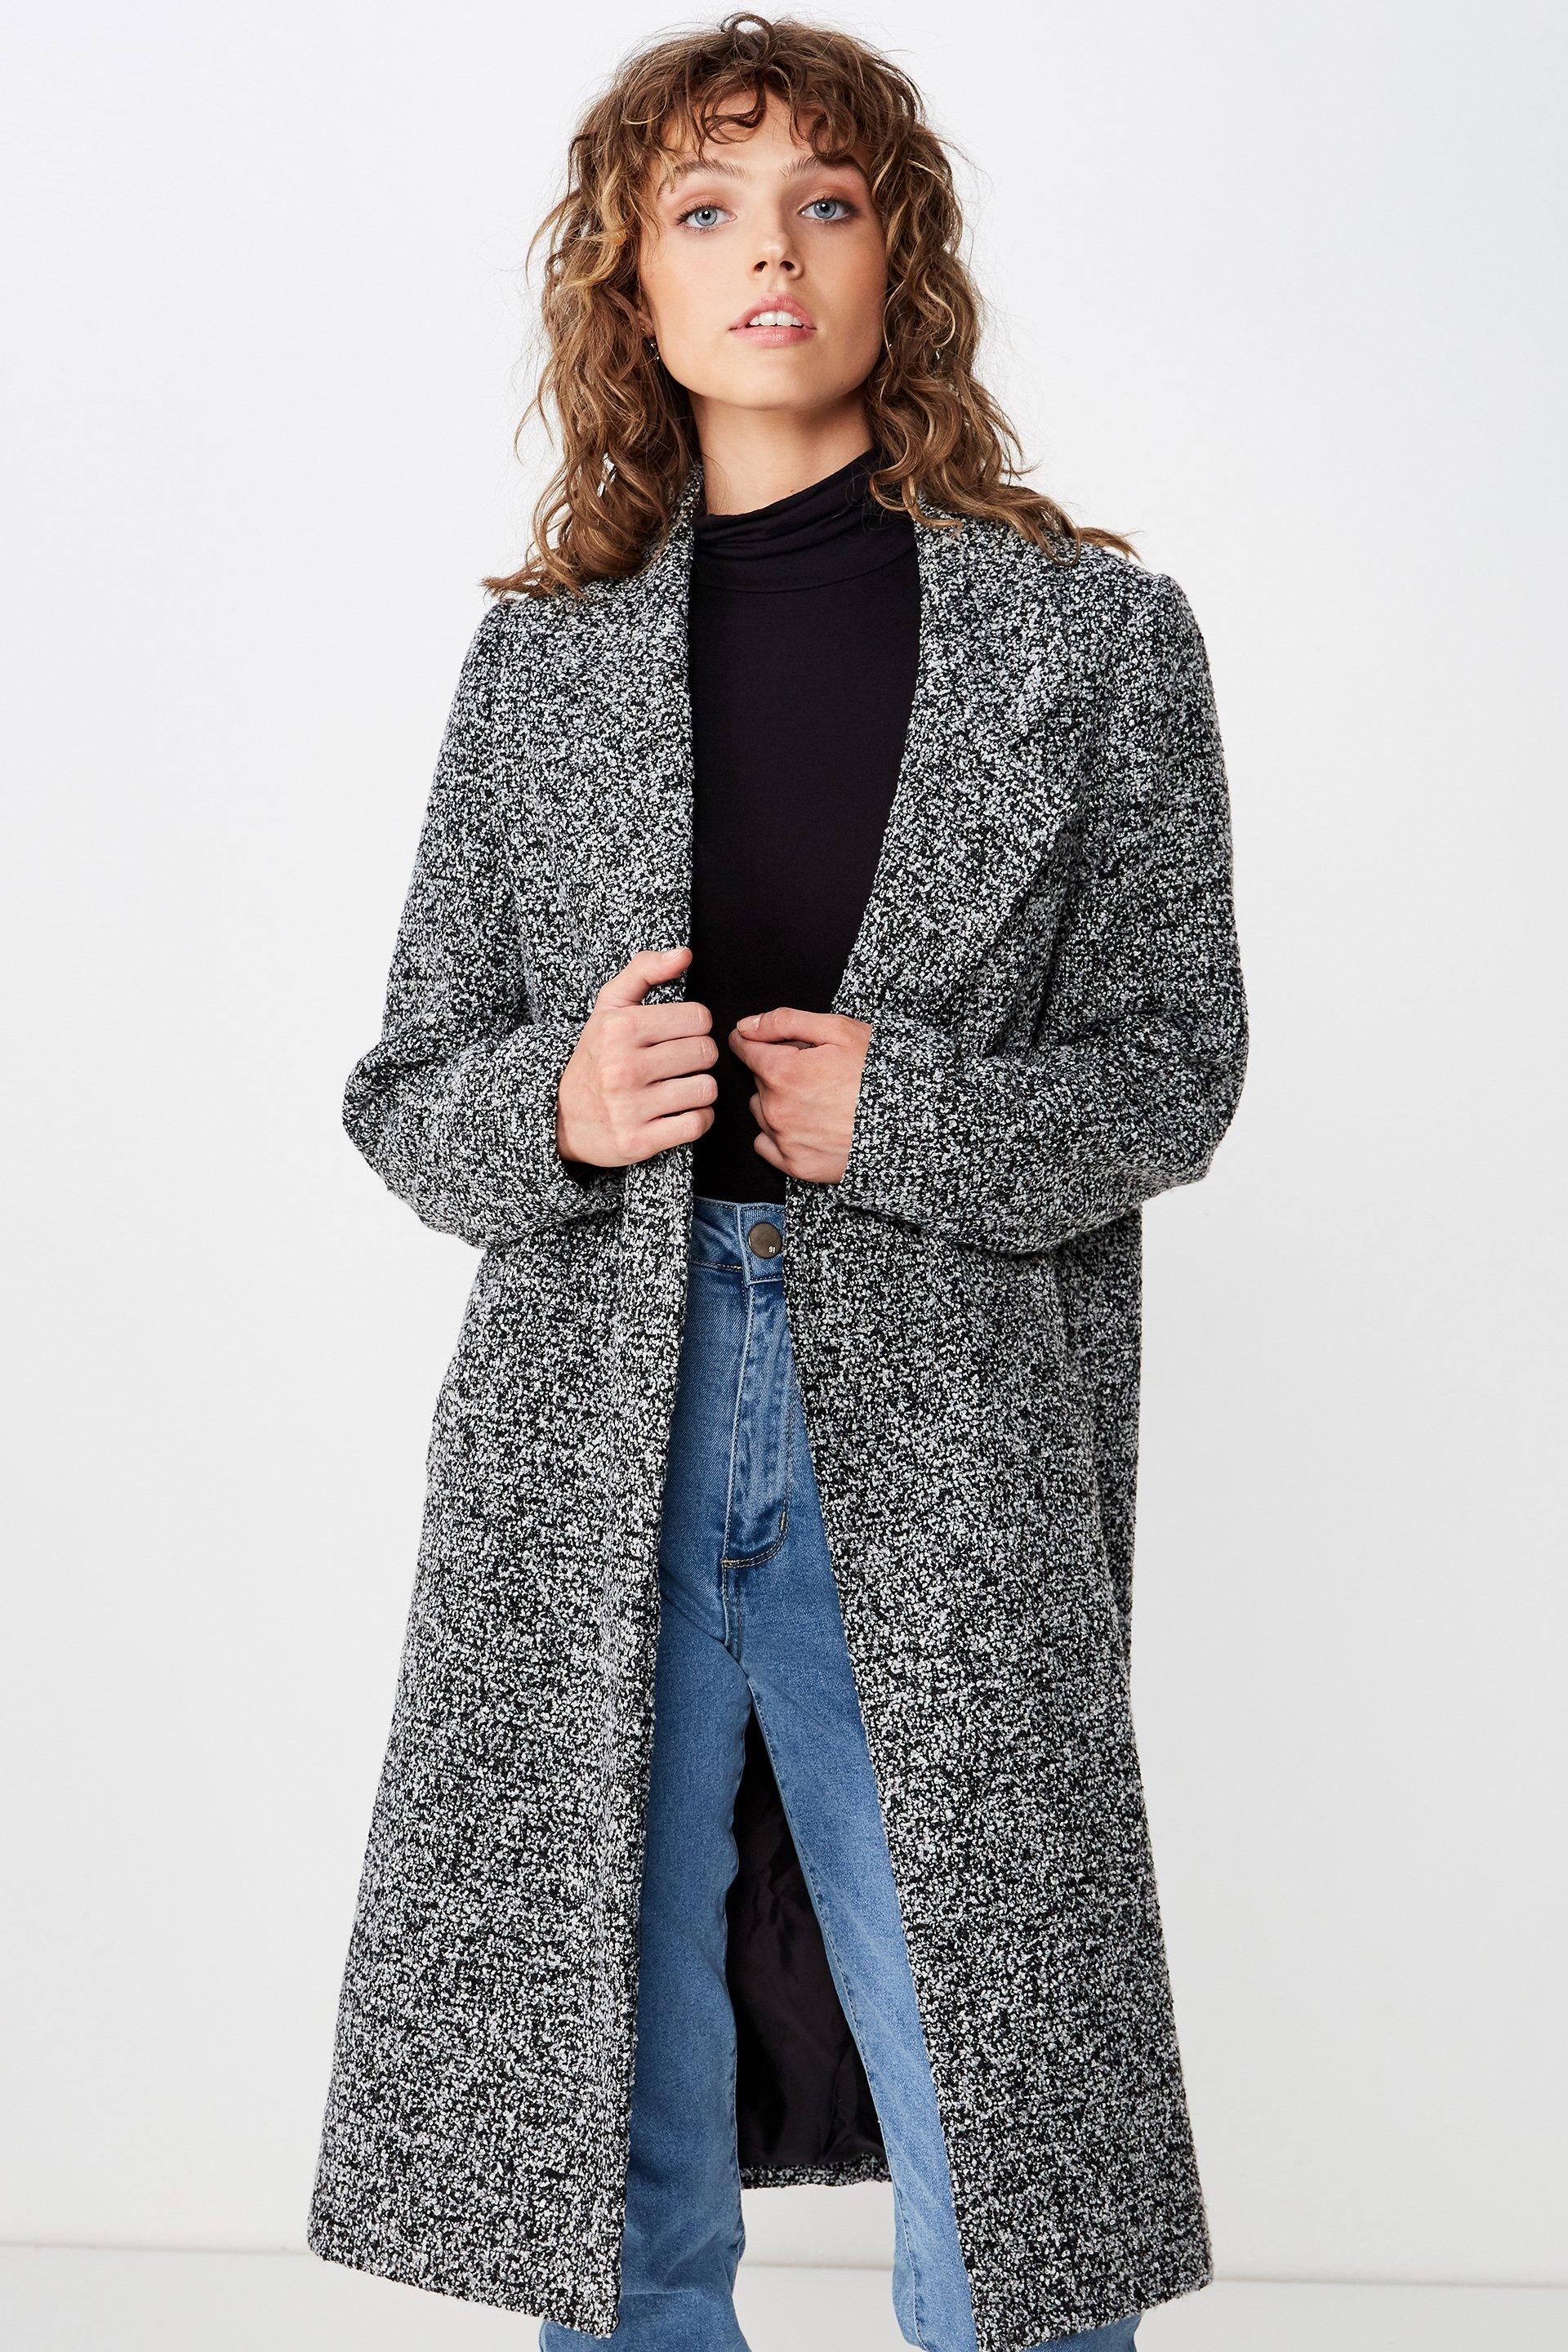 New mid length coat - charcoal Cotton On Coats | Superbalist.com